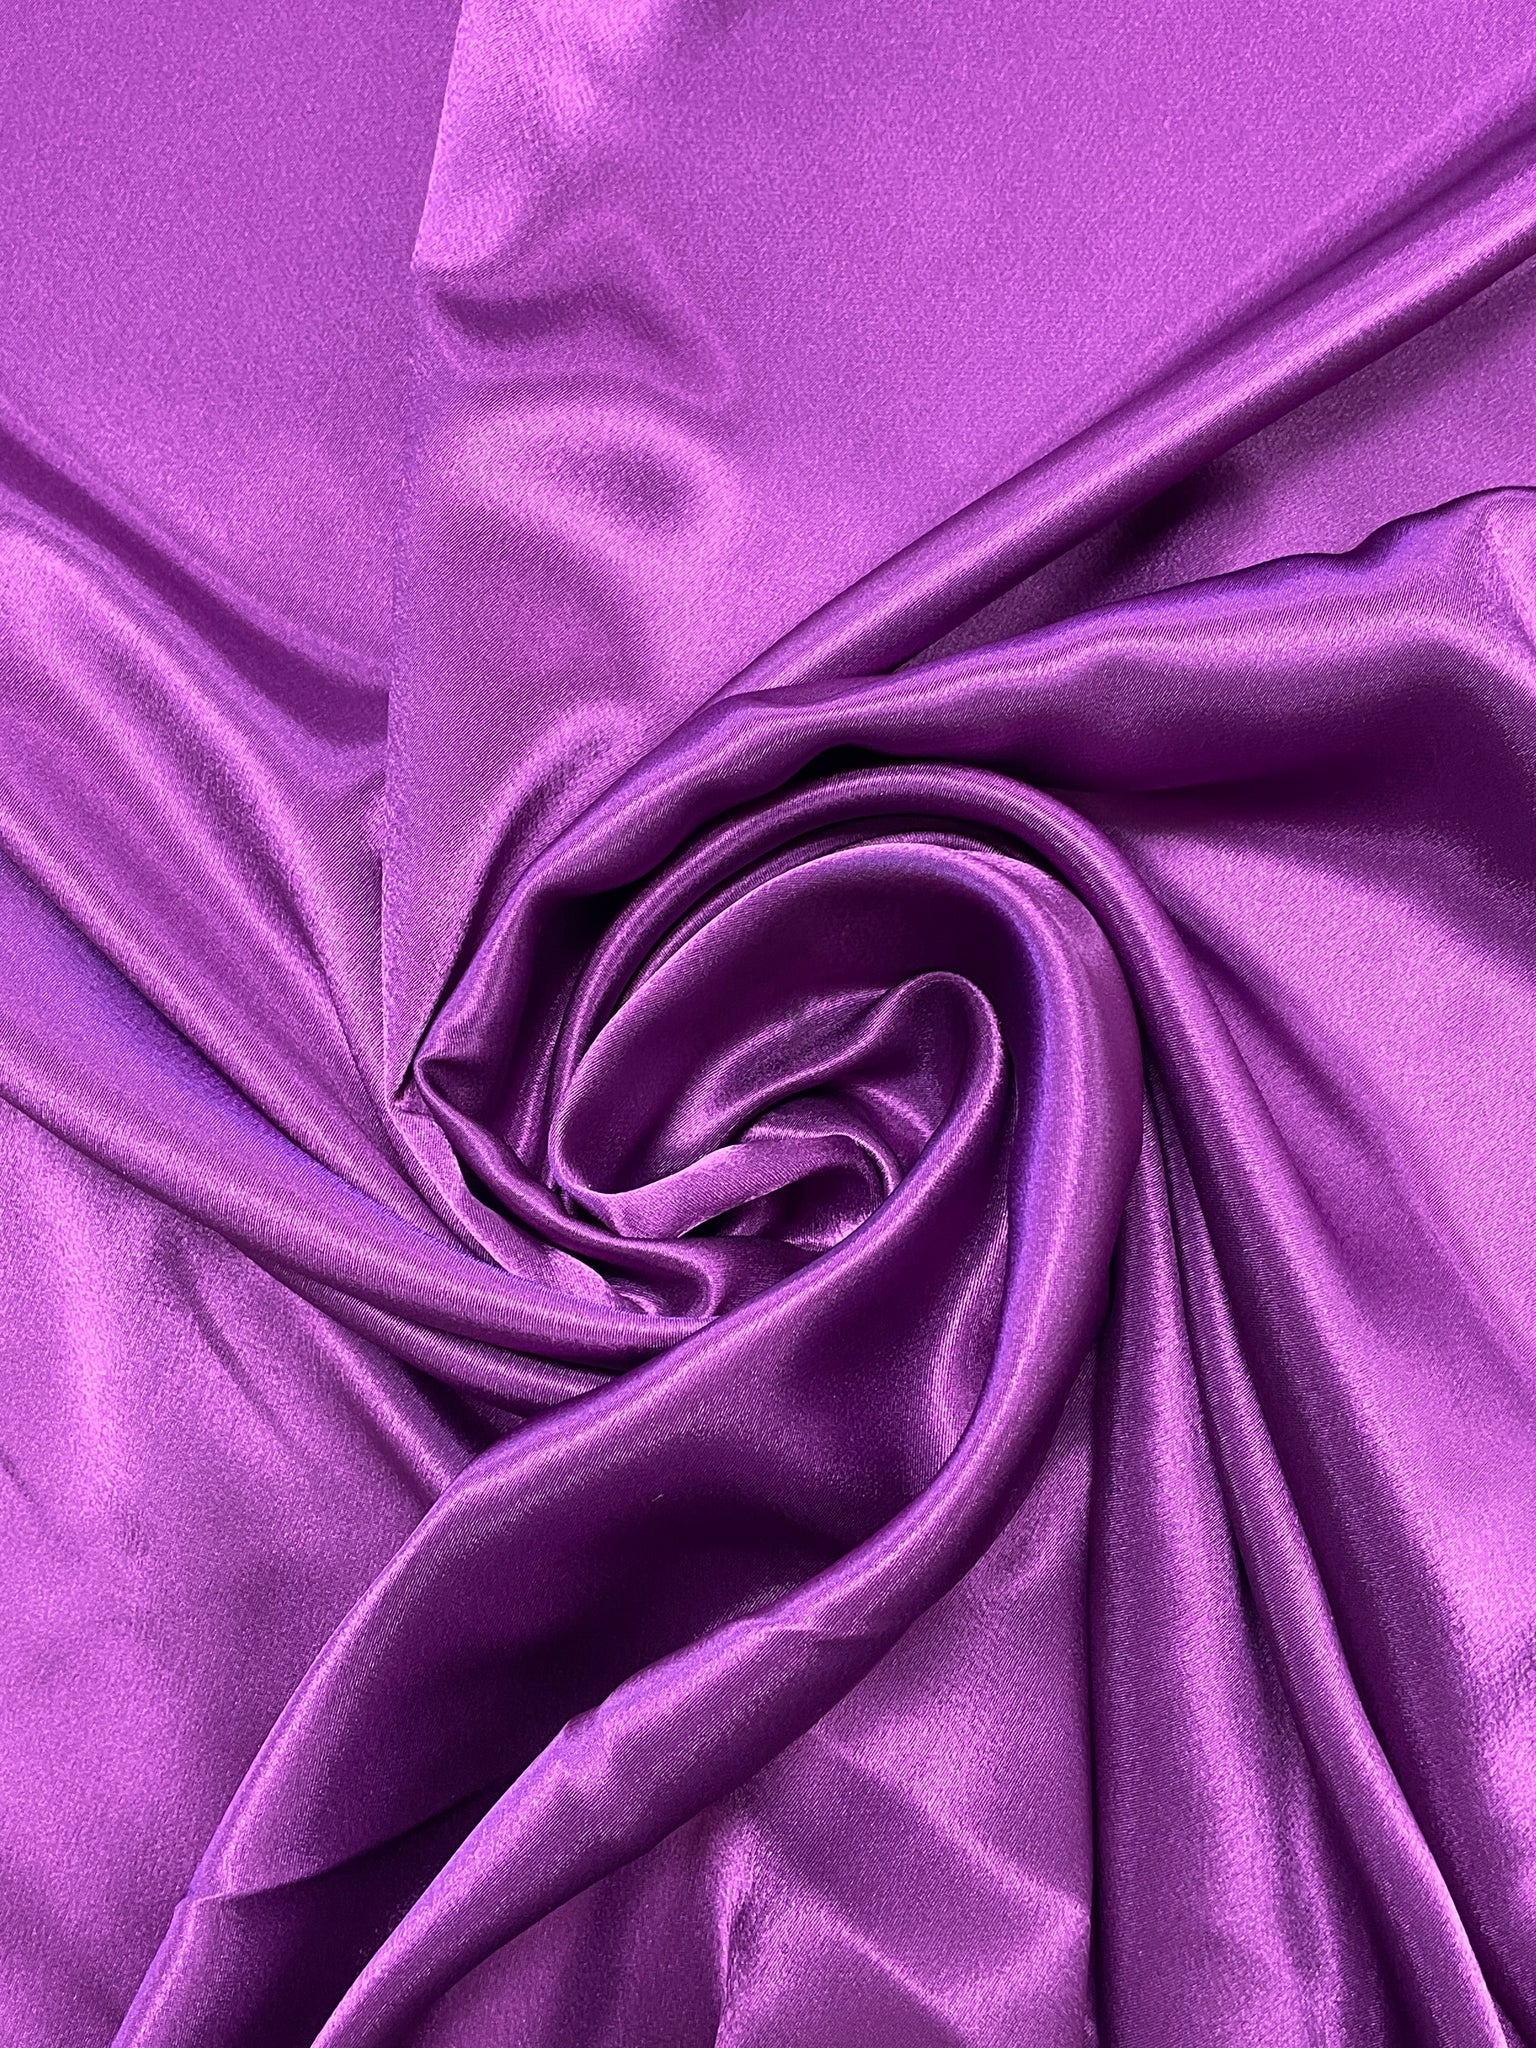 Polyester Satin - Royal Purple